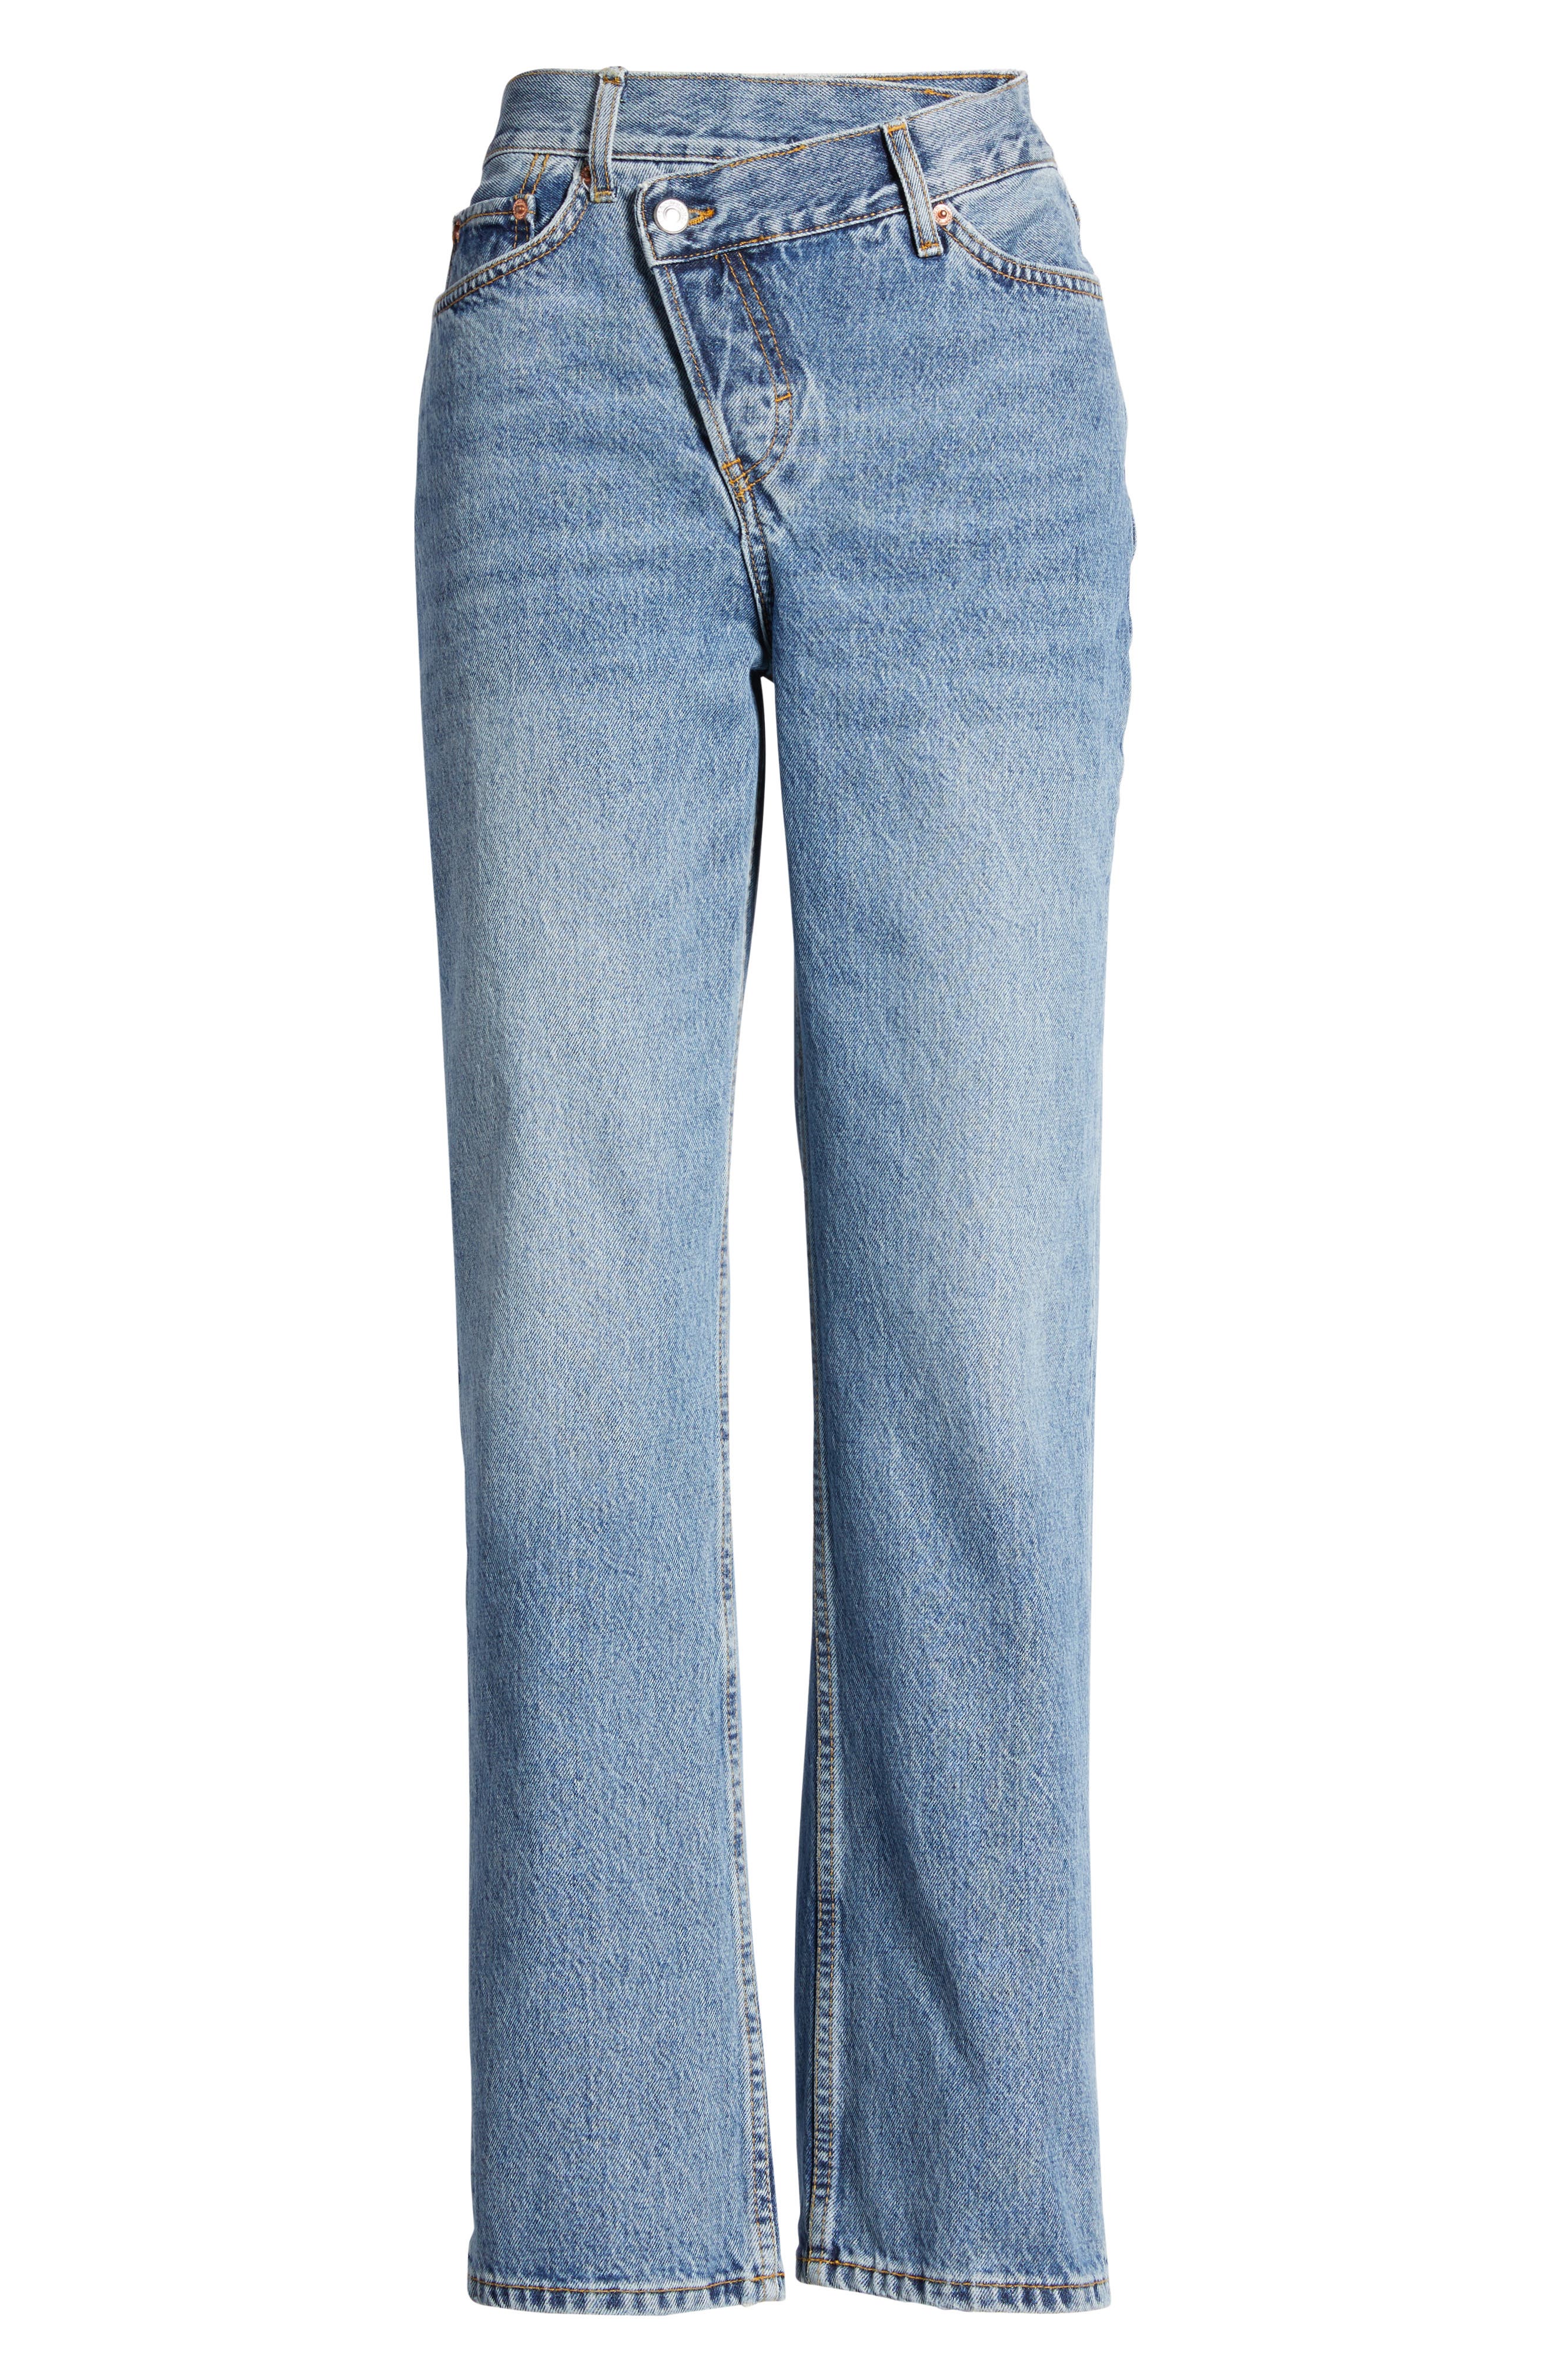 topshop jeans canada